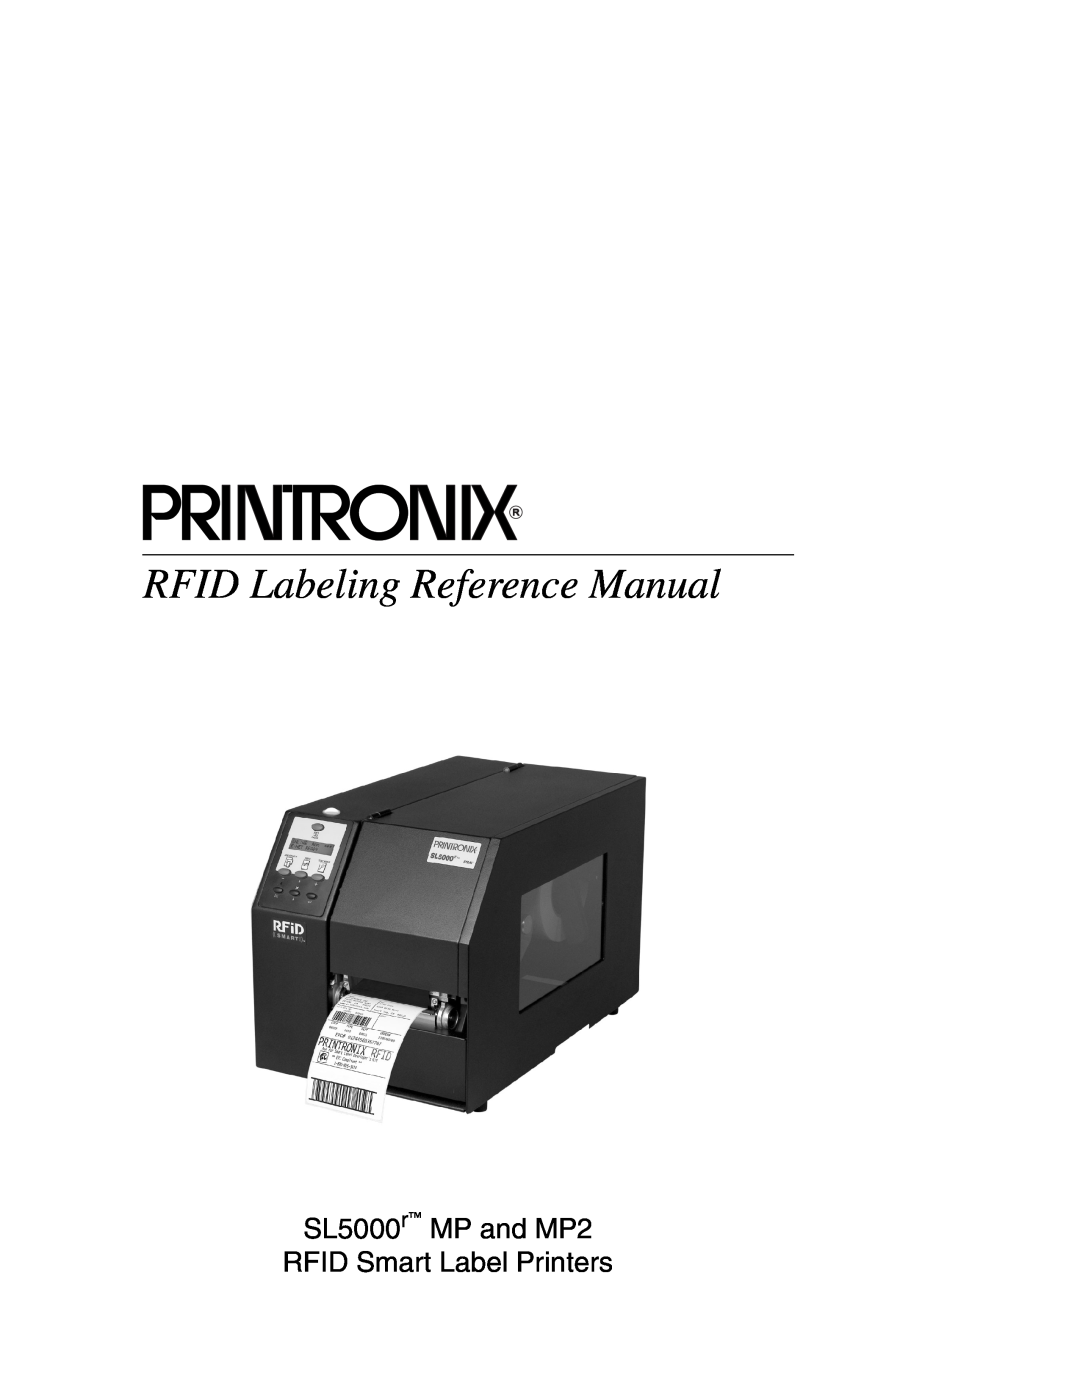 Printronix manual RFID Labeling Reference Manual, SL5000r MP and MP2 RFID Smart Label Printers 